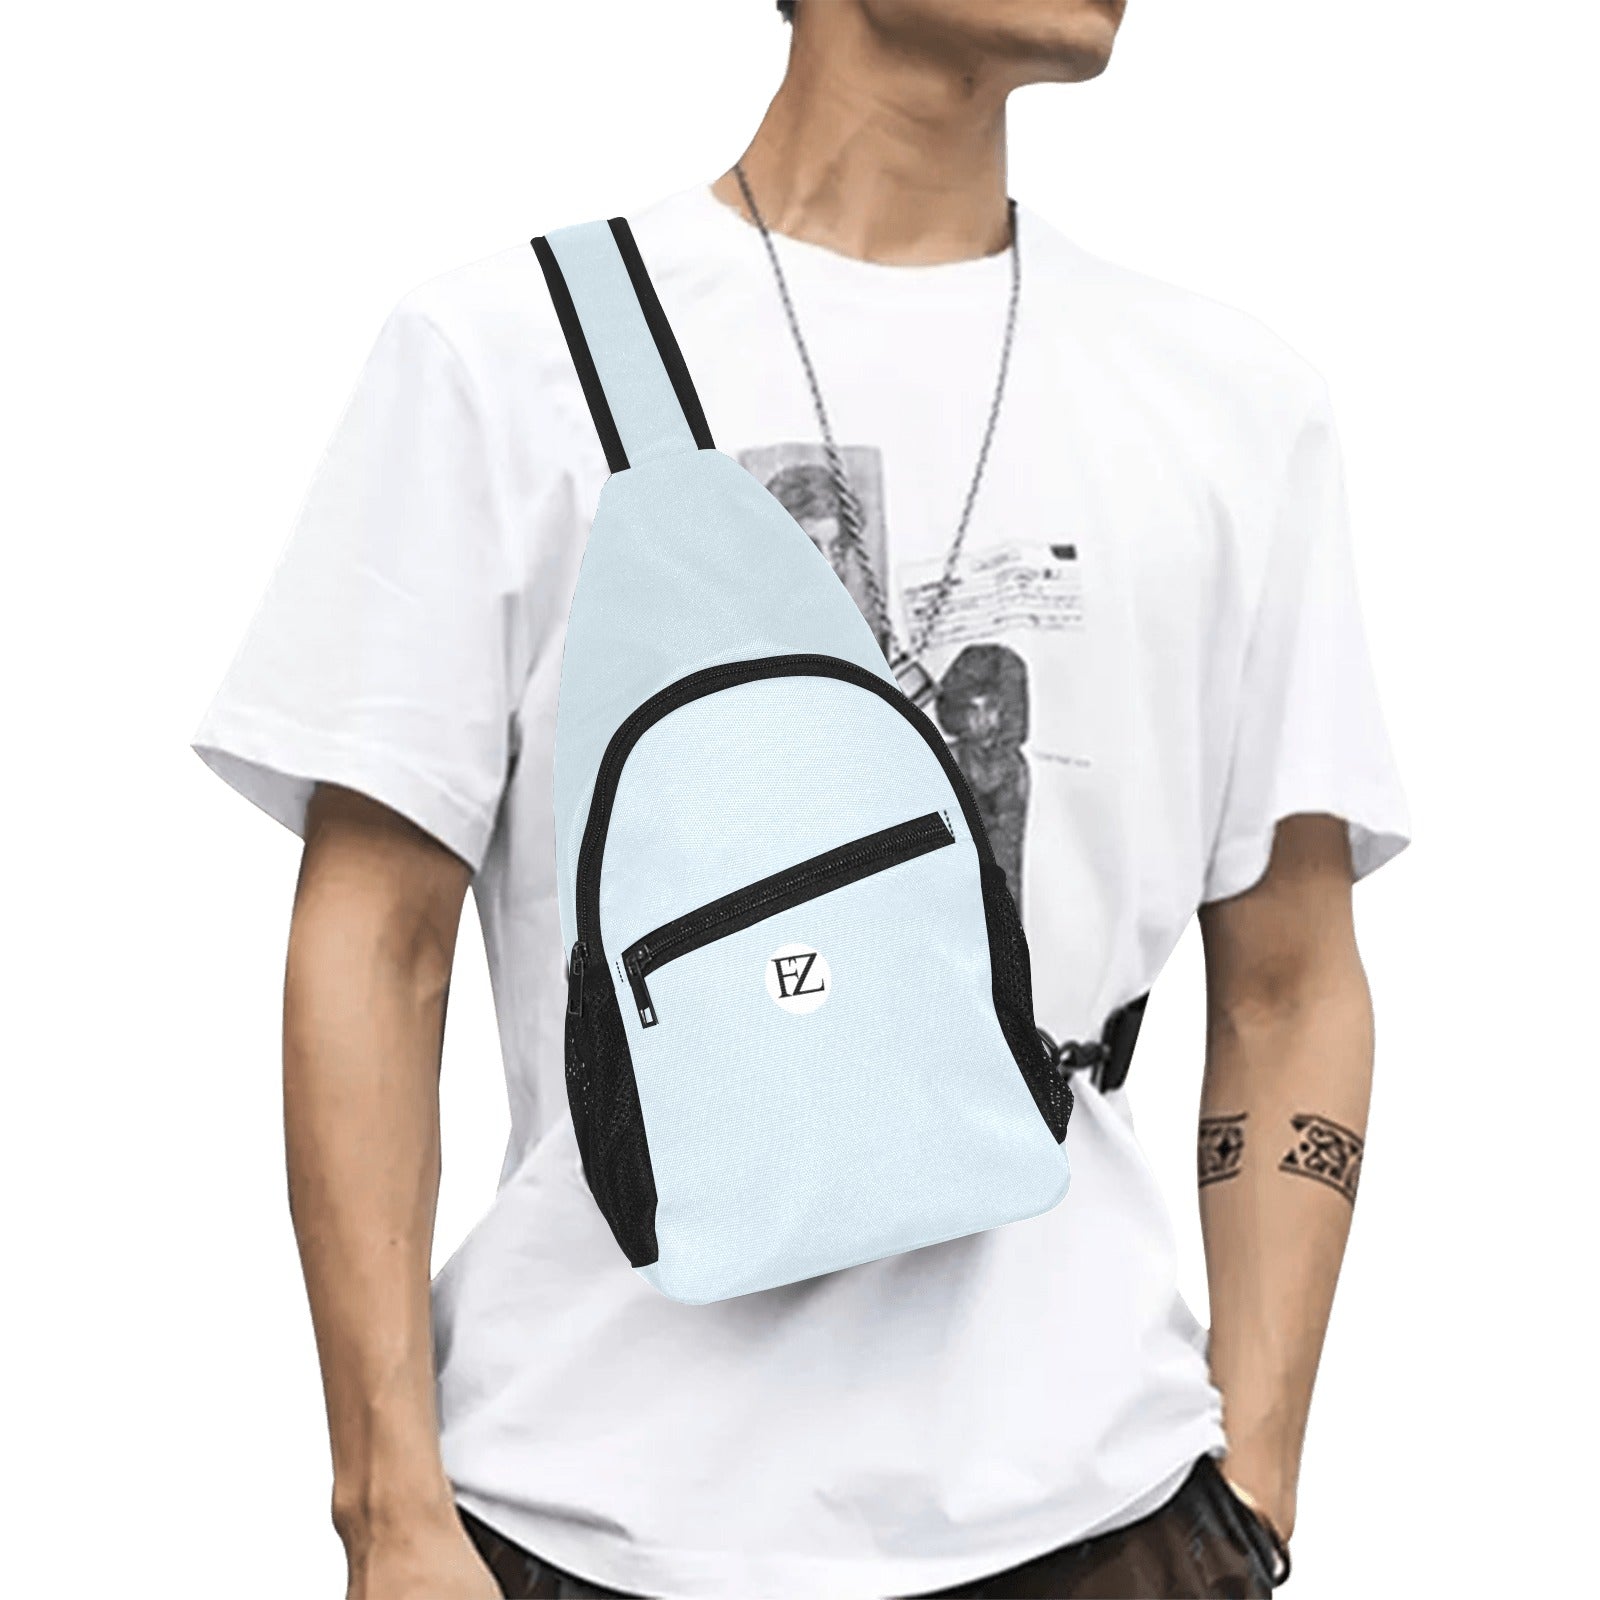 fz men's chest bag too one size / fz chest bag-blue all over print chest bag(model1719)